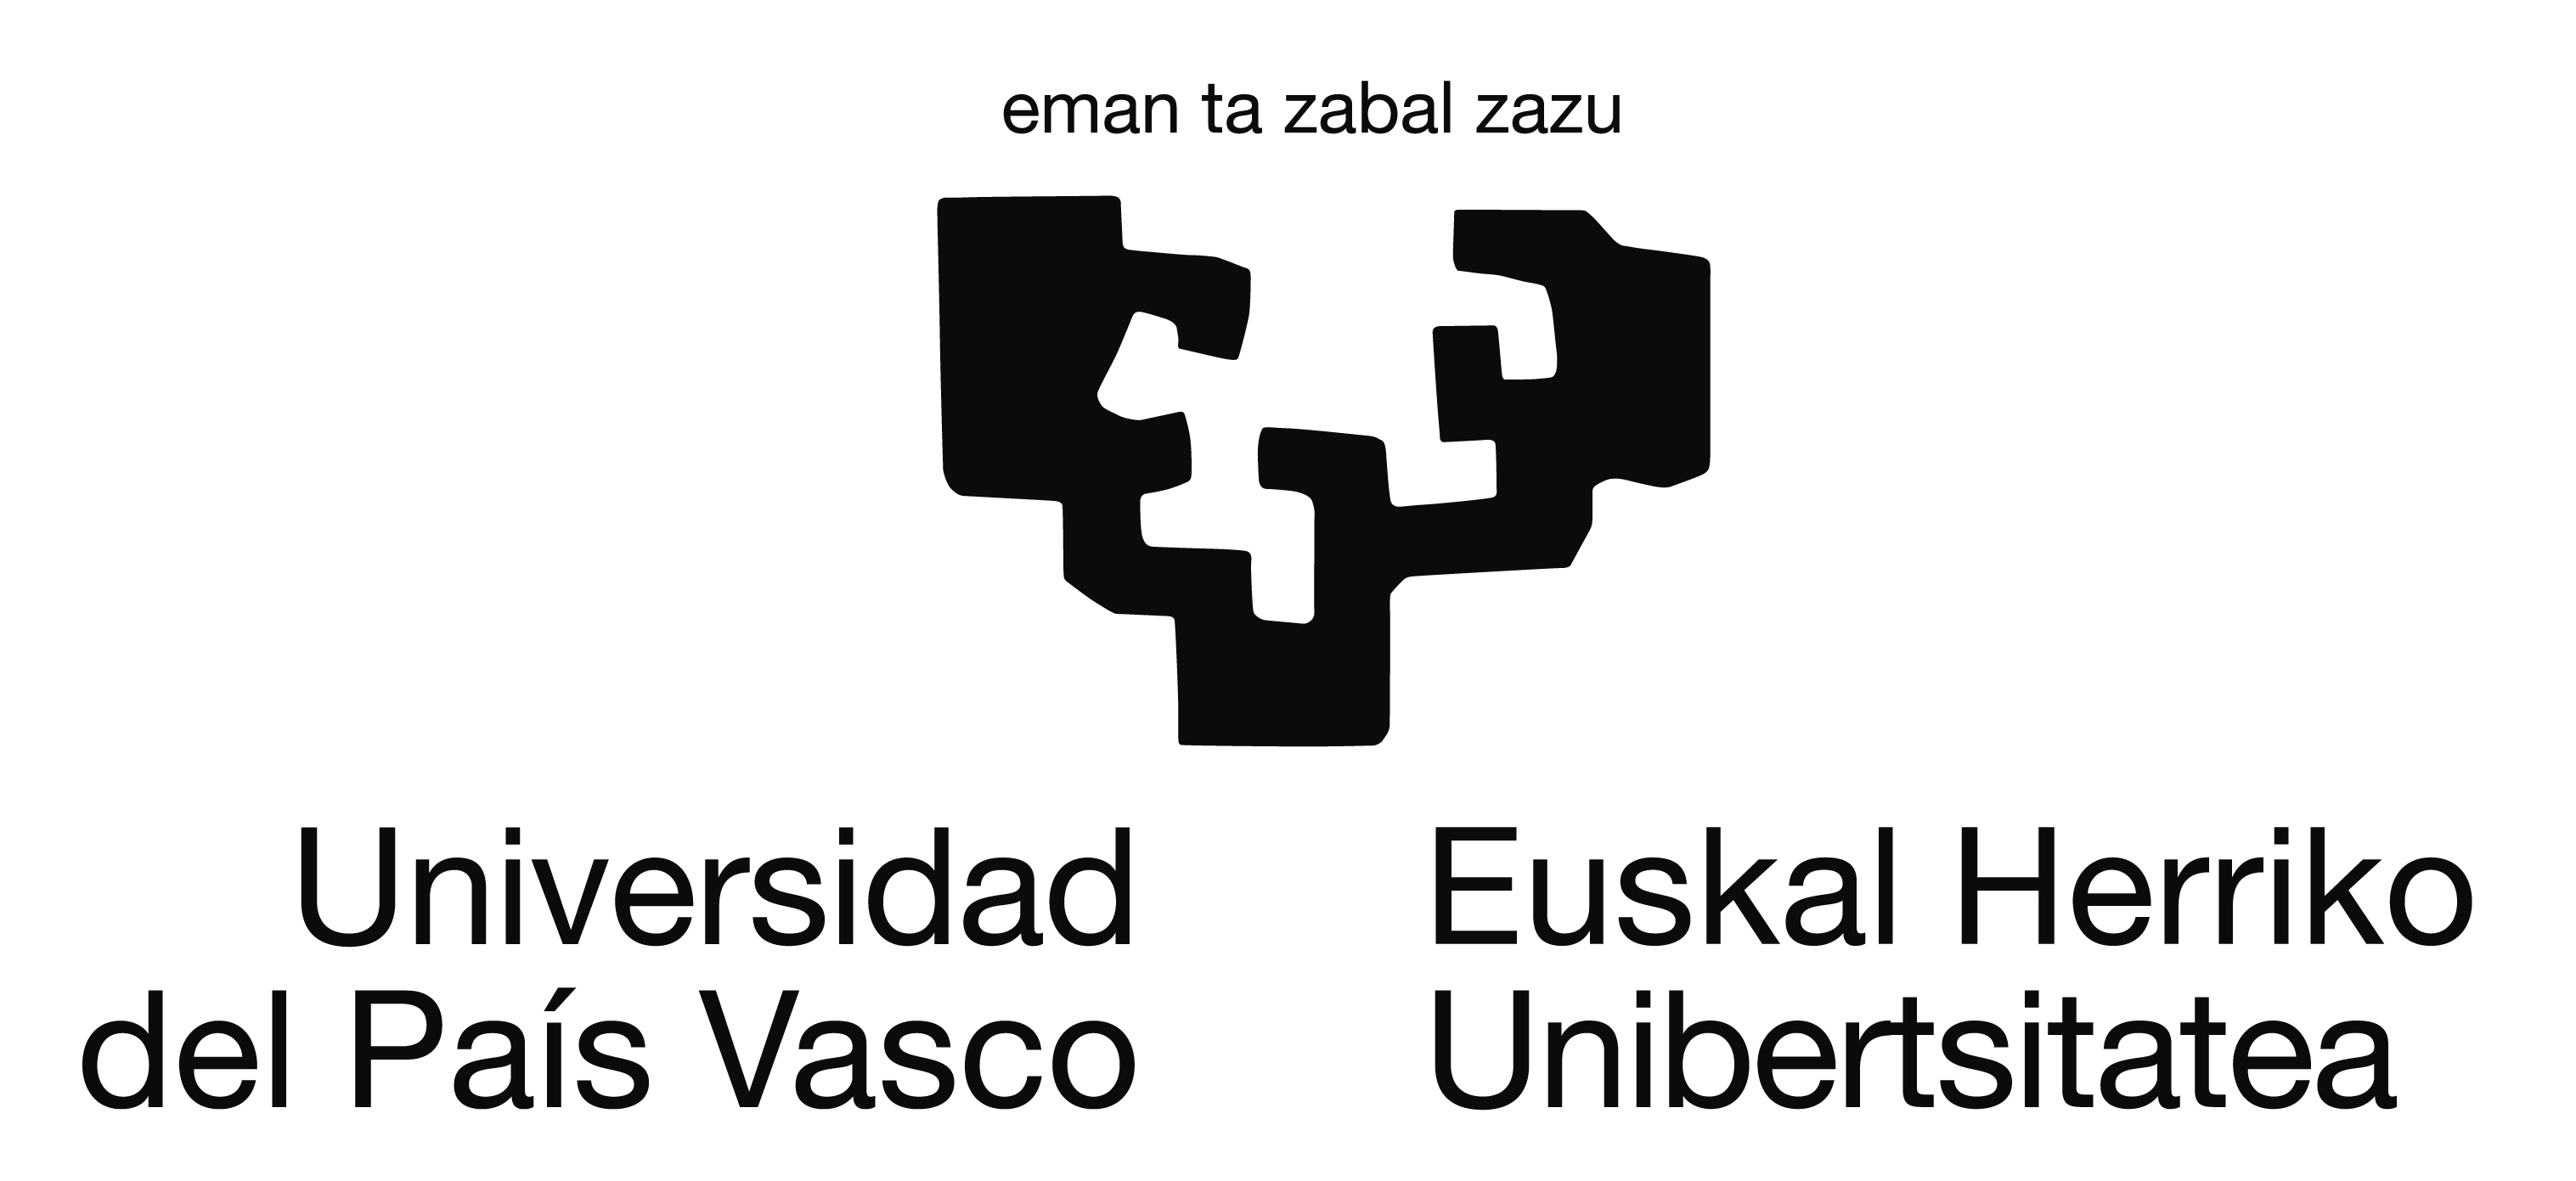 EHU, University of the Basque Country